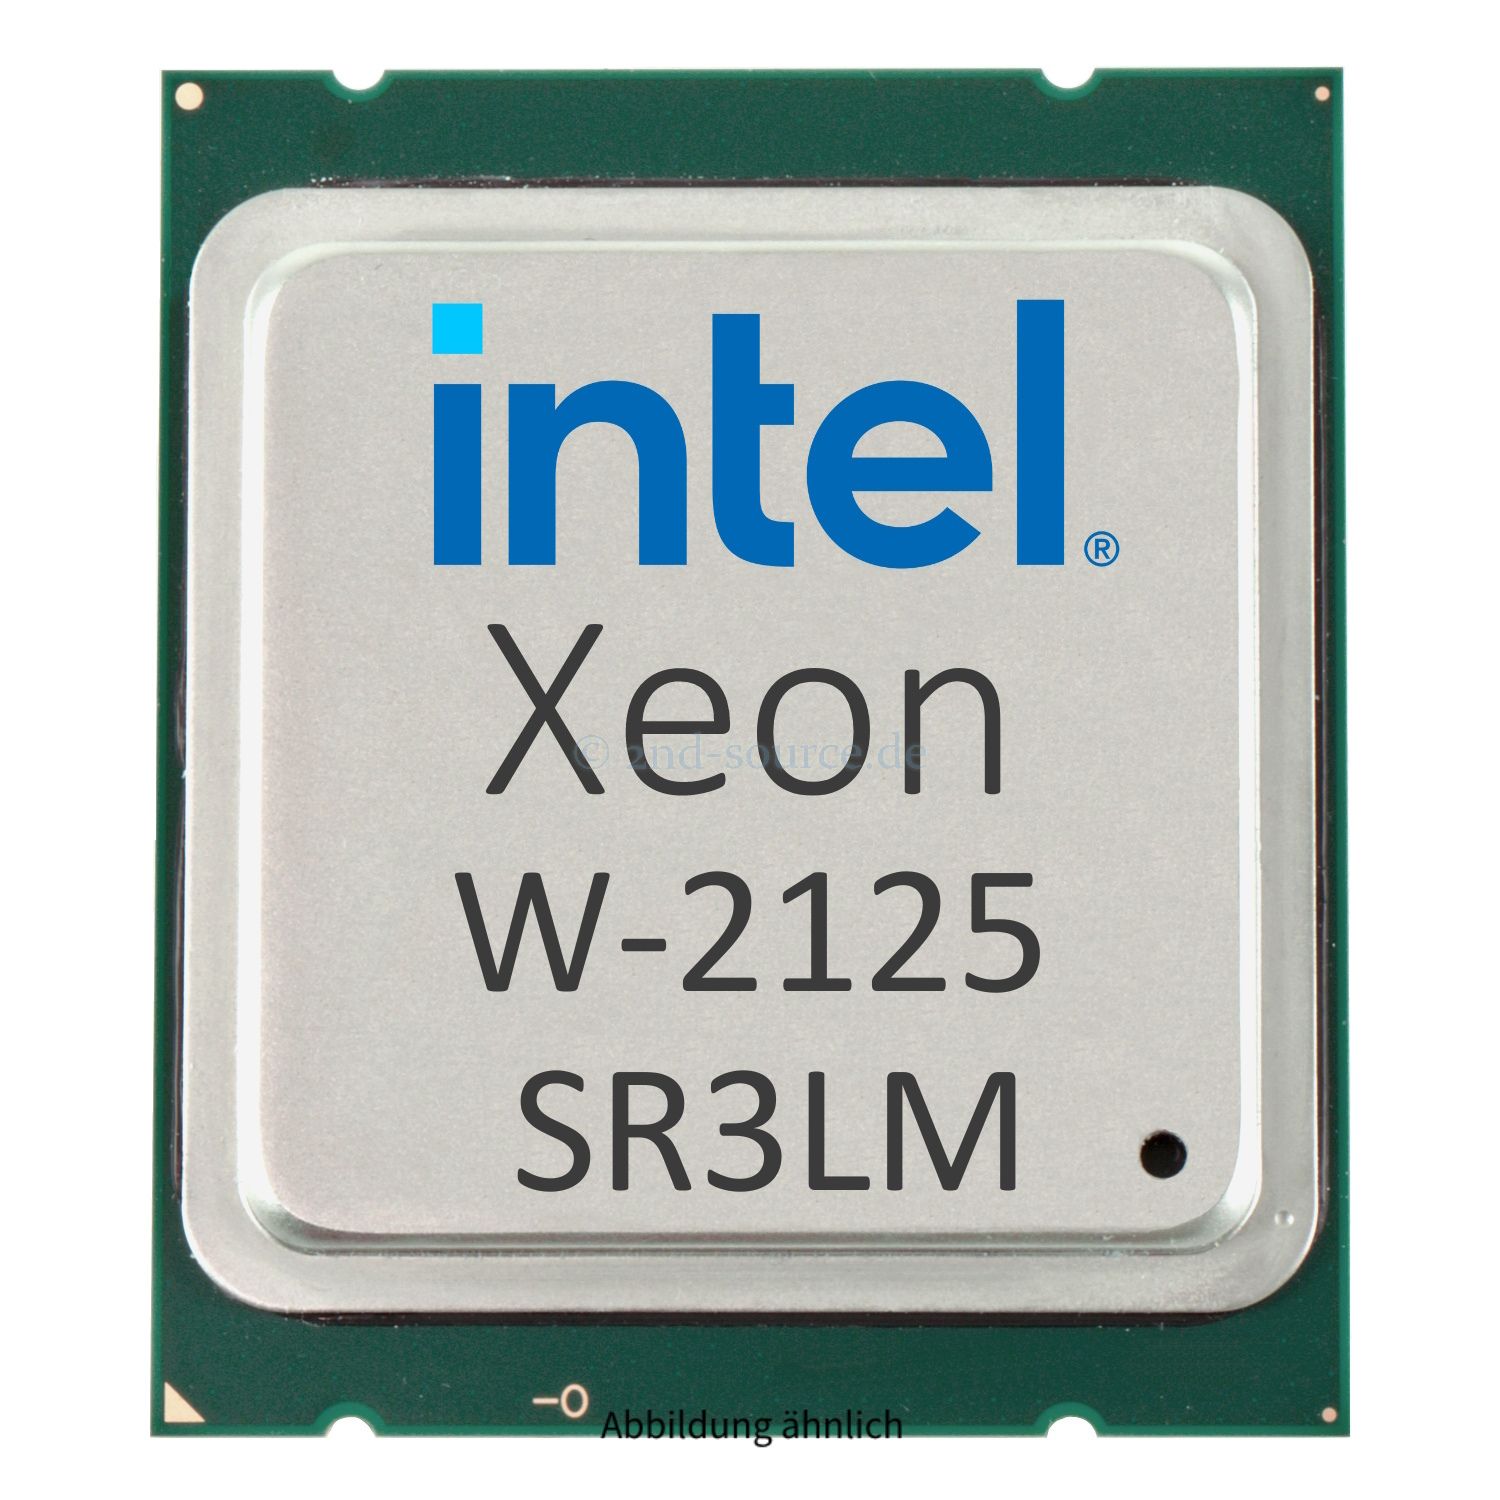 Intel Xeon W-2125 4.00GHz 8.25MB 4-Core CPU 120W SR3LM CD8067303533303